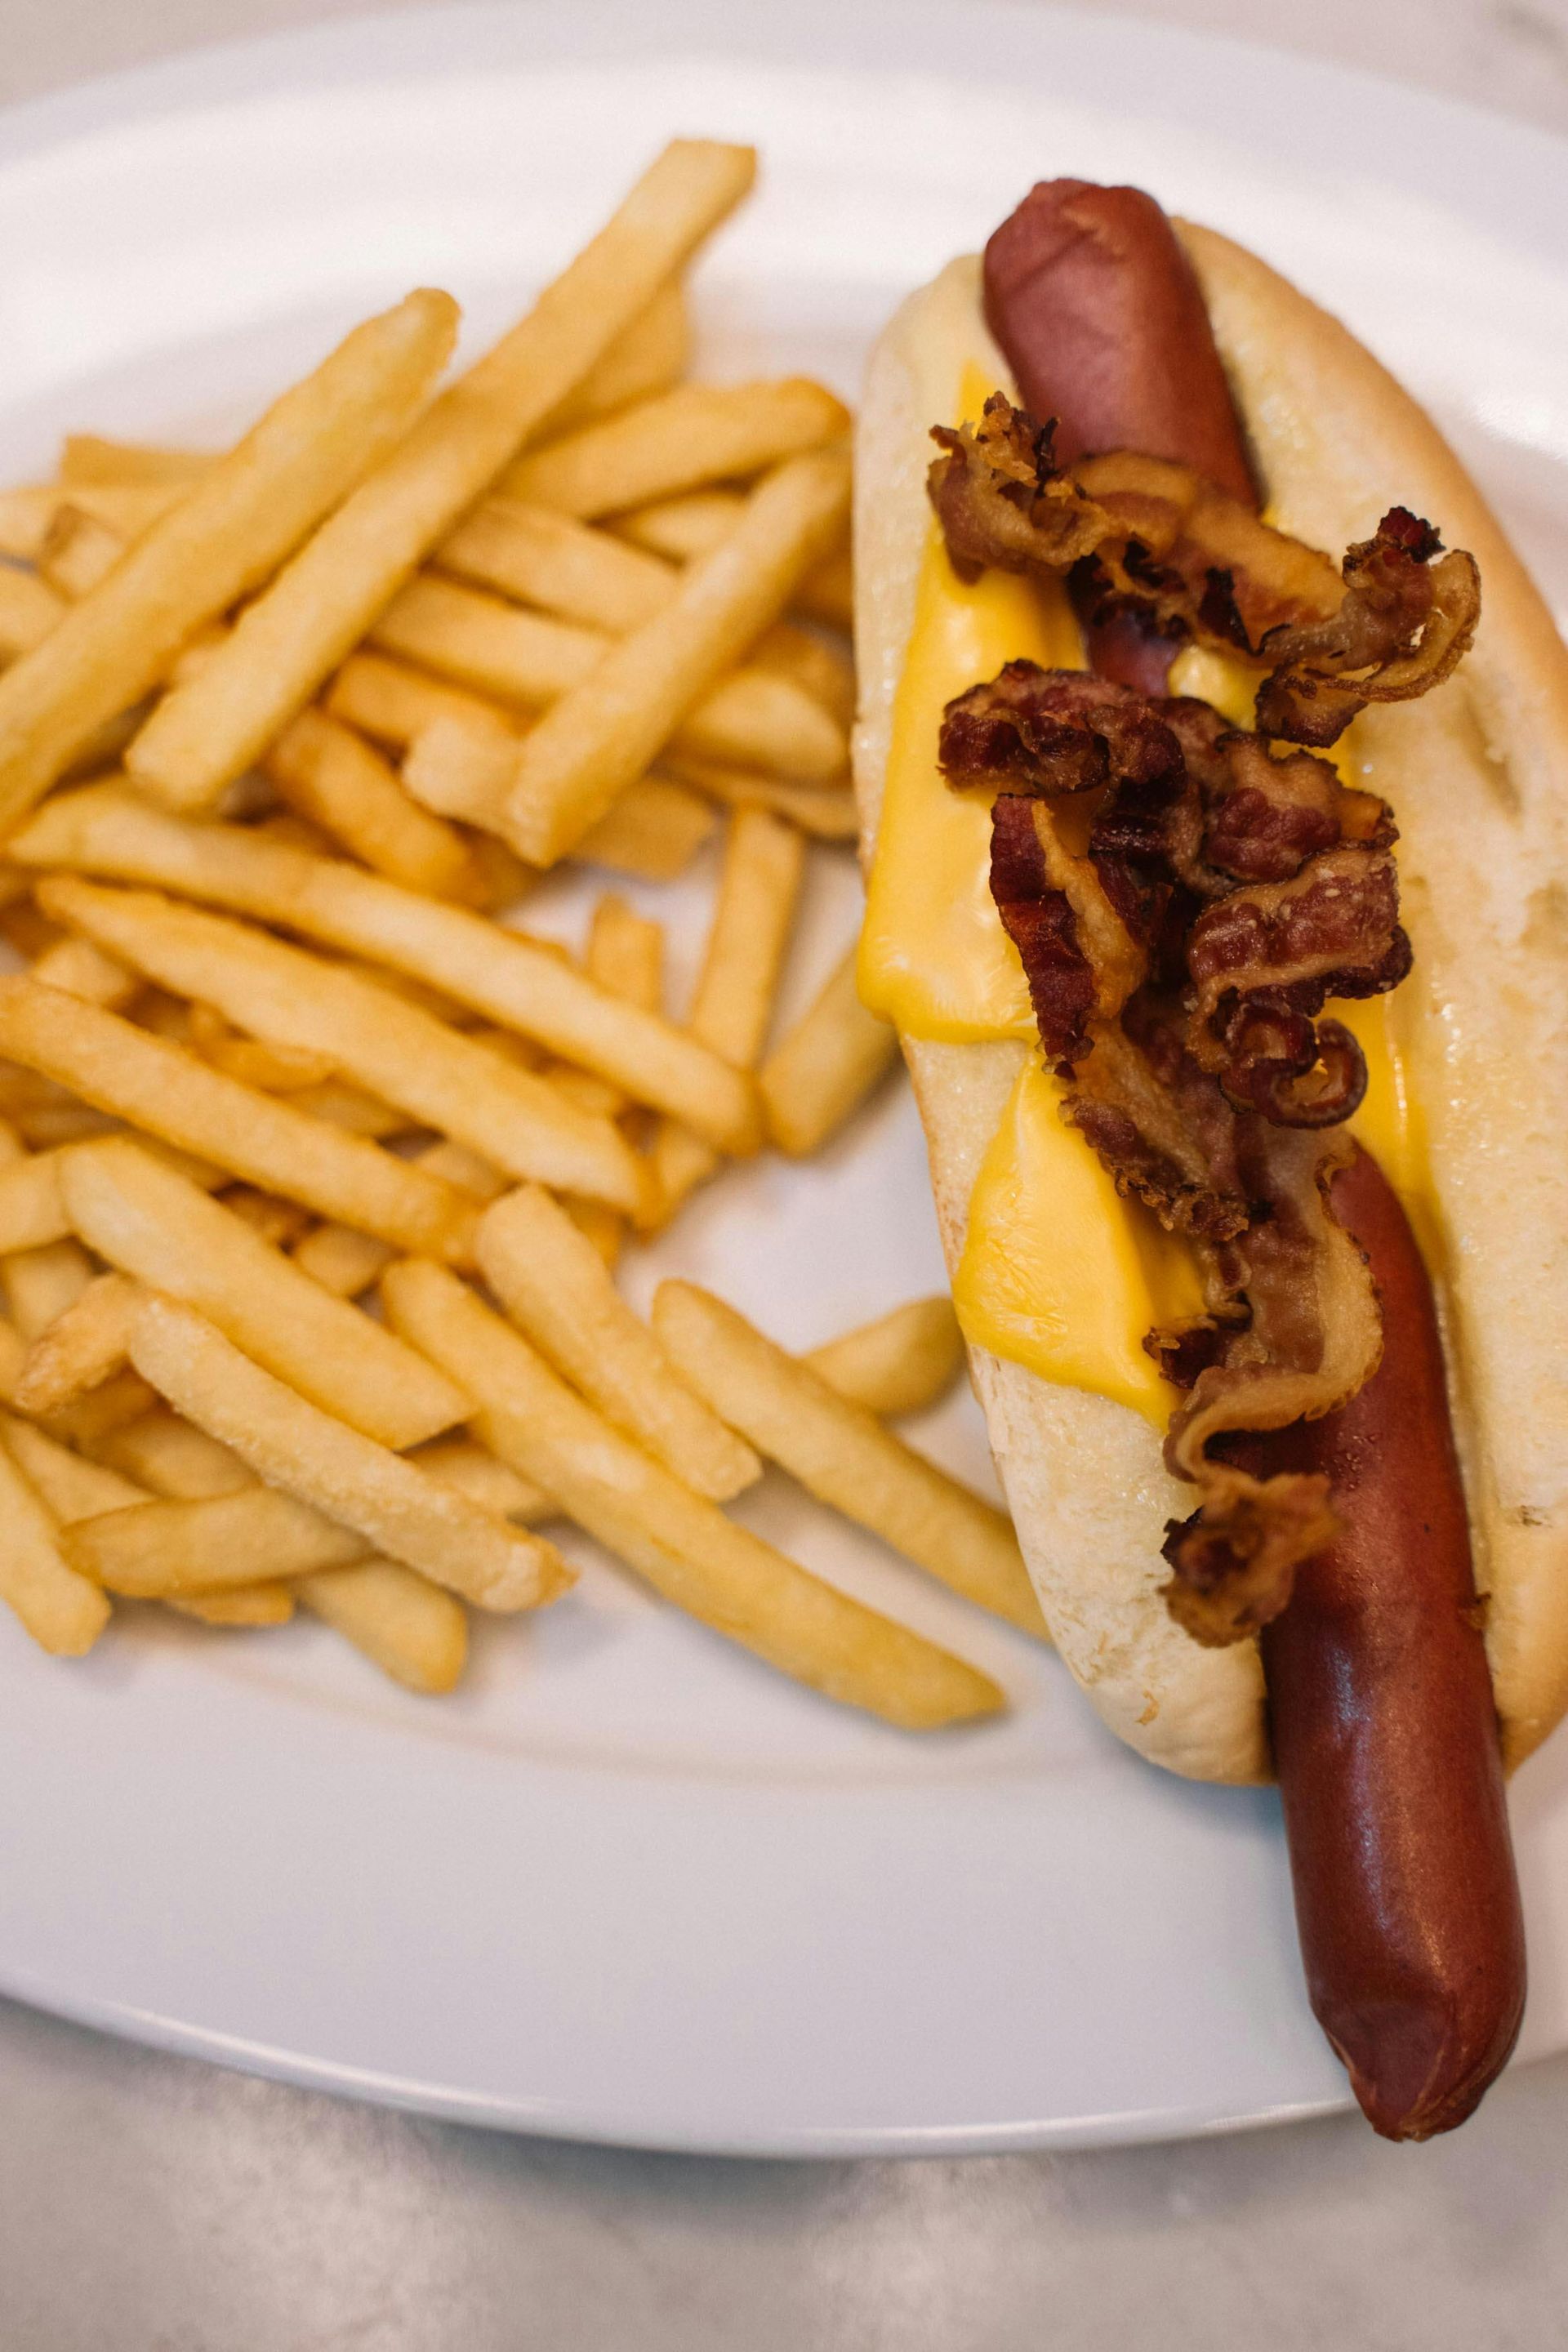 Hot Dog Sandwich Meal